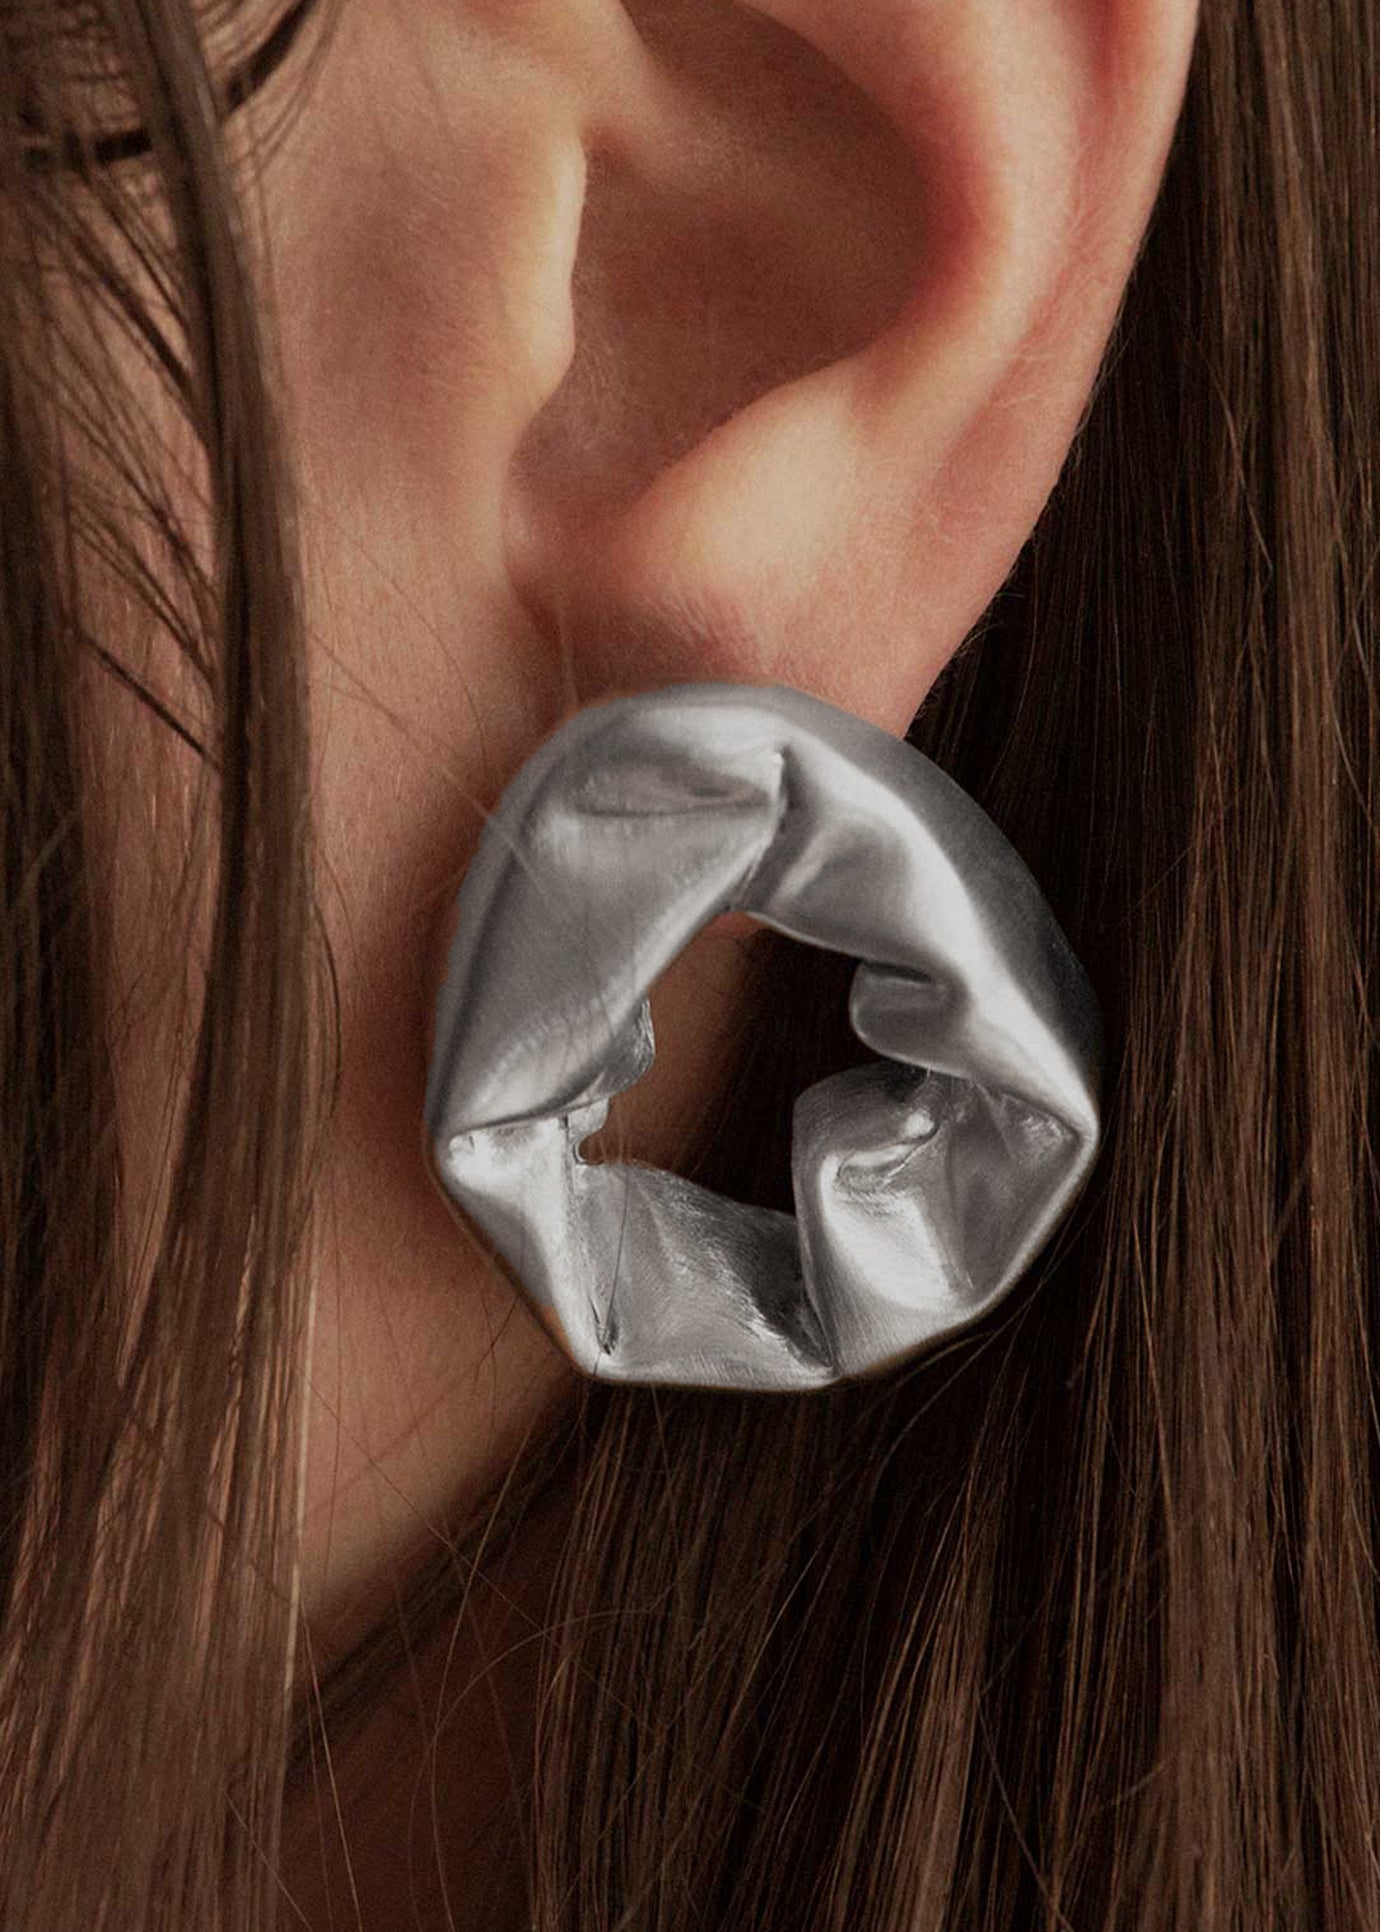 Completedworks Scrunch Earrings - Silver - 1